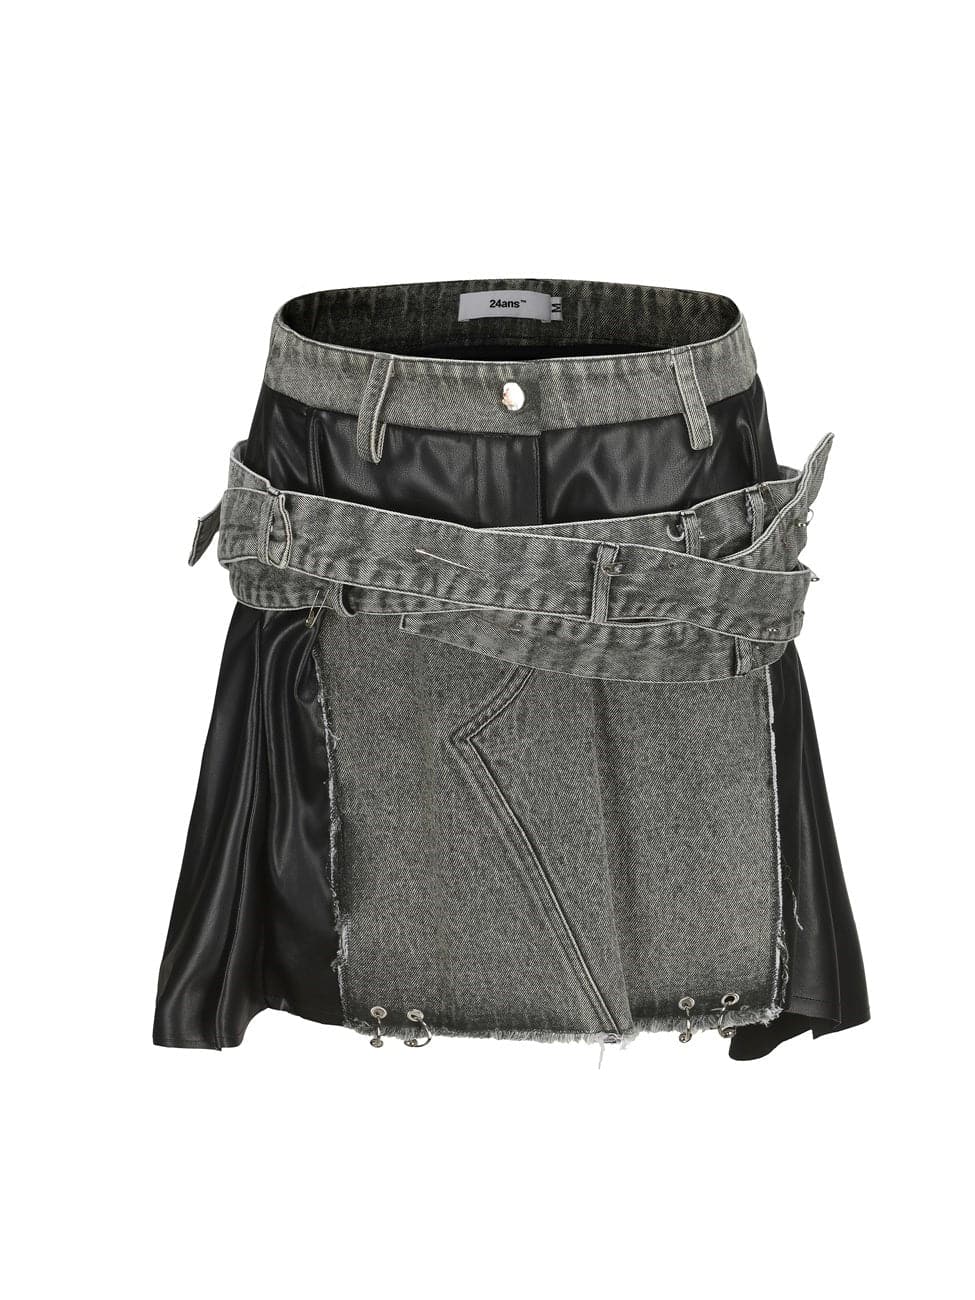 Sleek Leather Halter Top And Short Skirt - chiclara